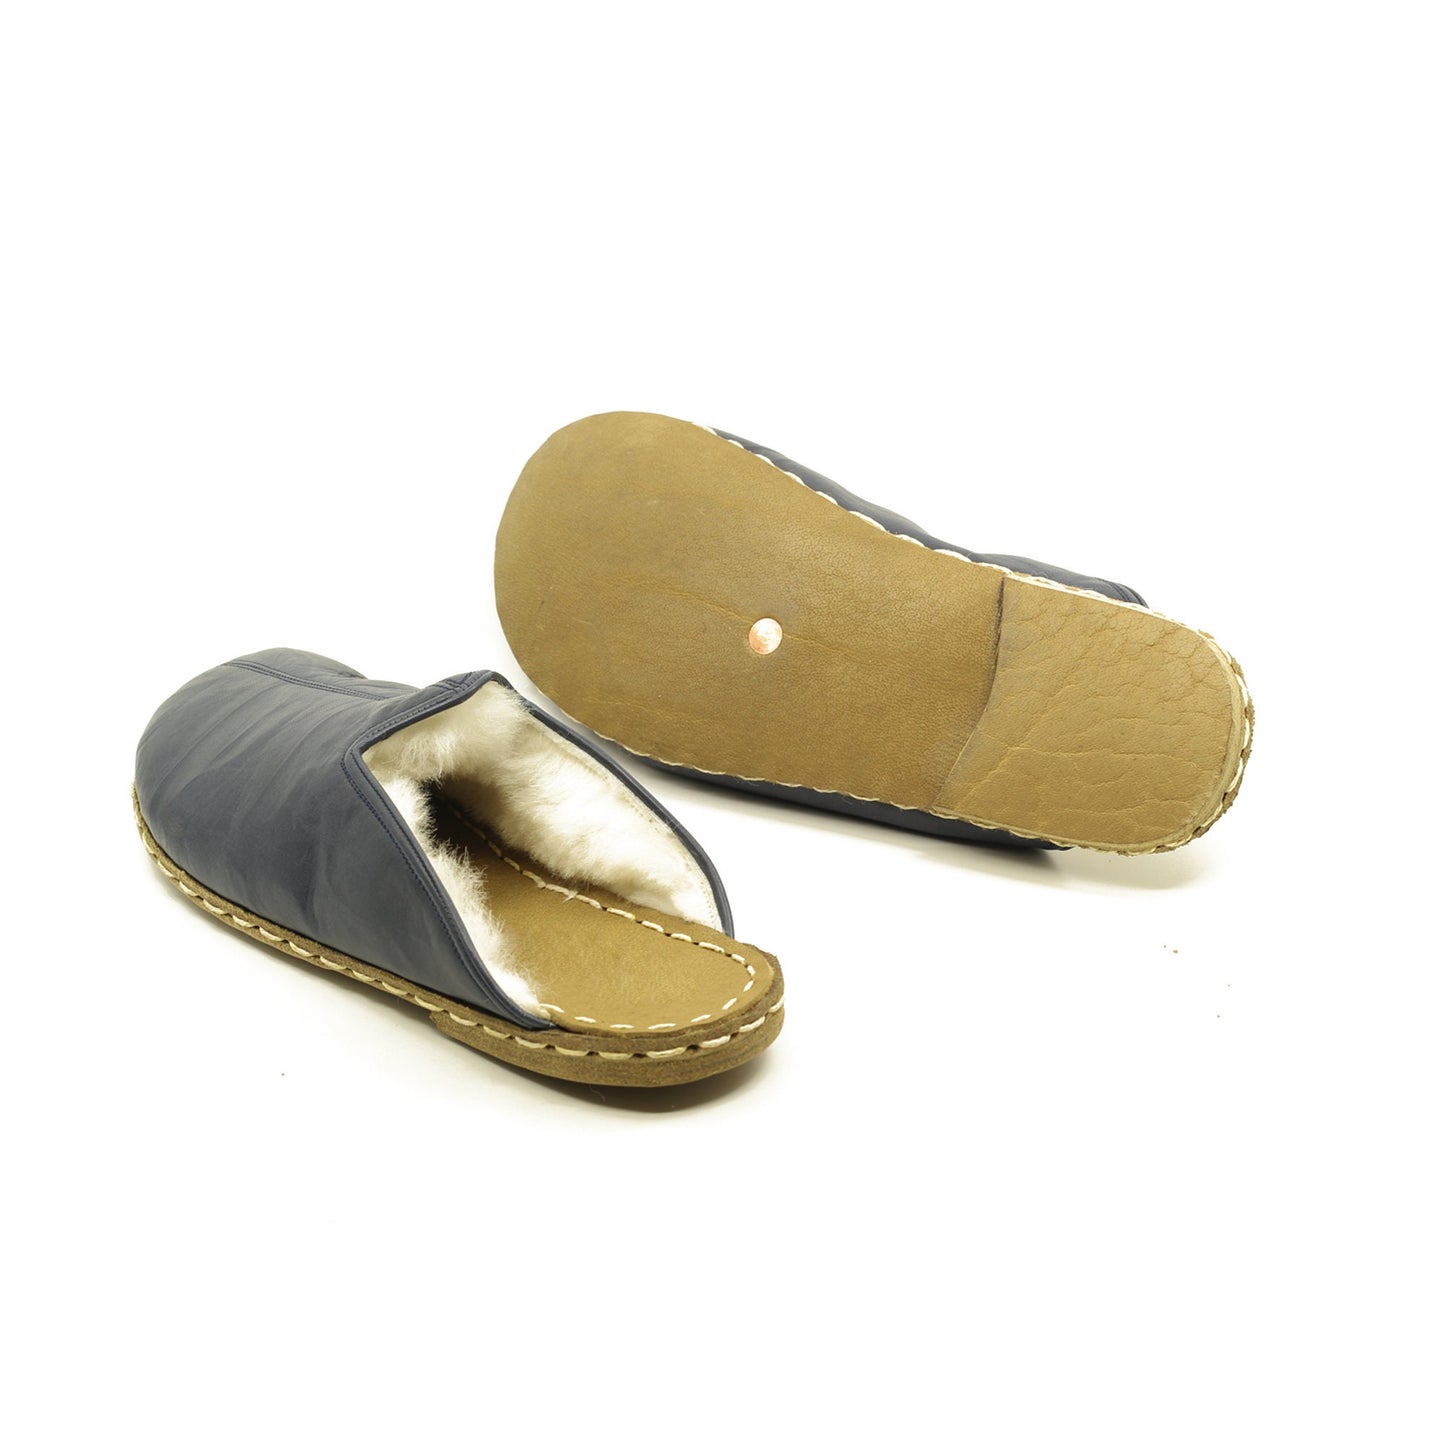 Nefes Shearling Leather Slippers: Women's Barefoot Luxury